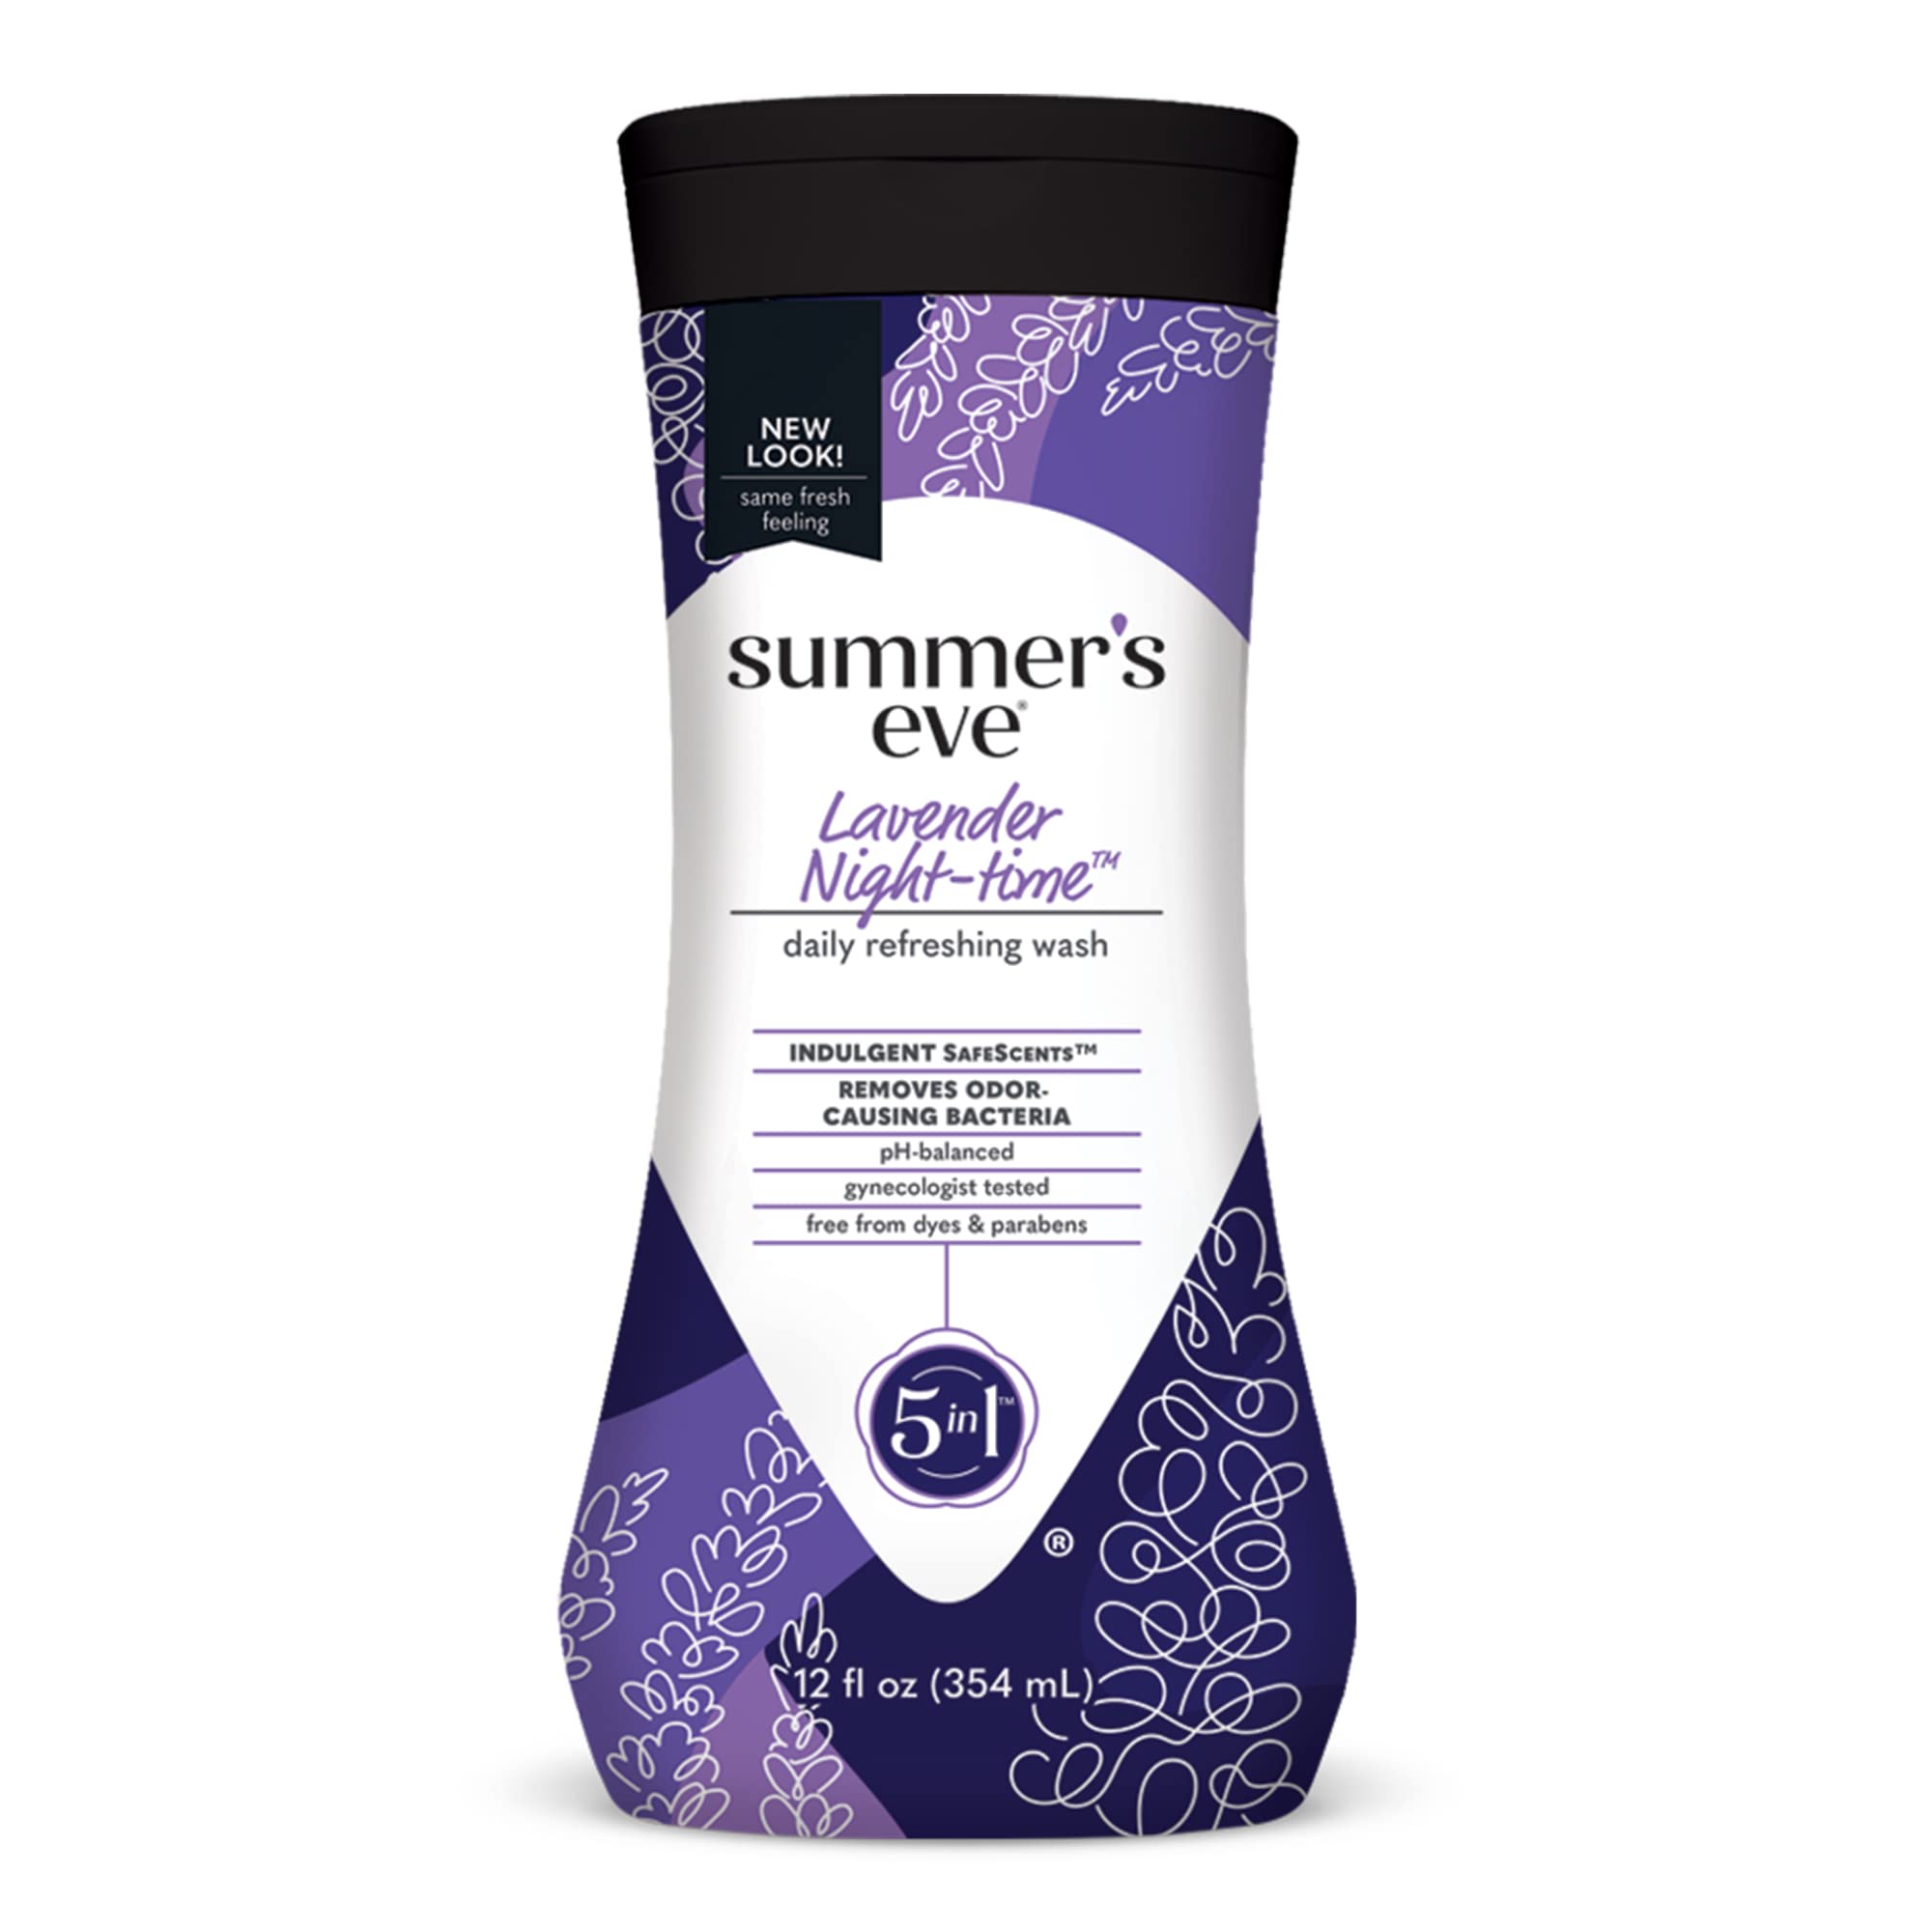 Summer's Eve Lavender Night-time Daily Refreshing All Over Feminine Body Wash, Removes Odor, pH balanced, 12 fl oz